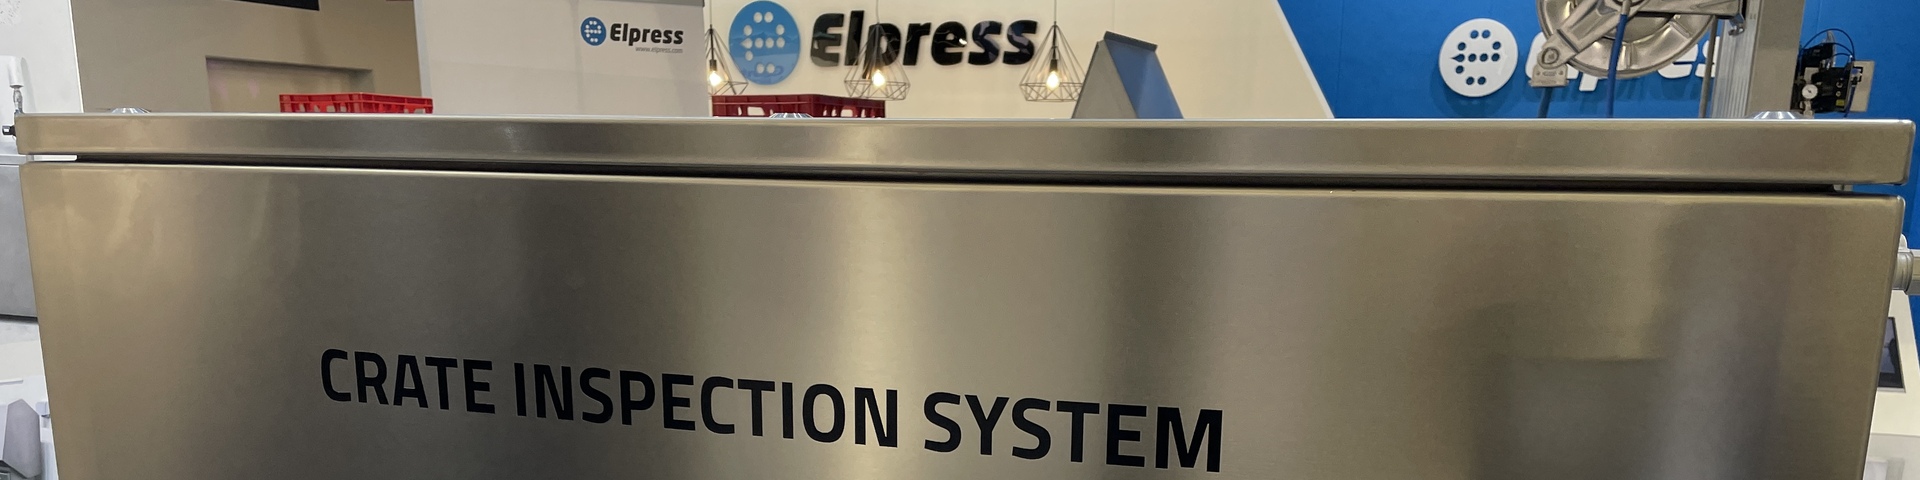 Elpress bewijst dat hygiëne en reiniging zich prima laten automatiseren